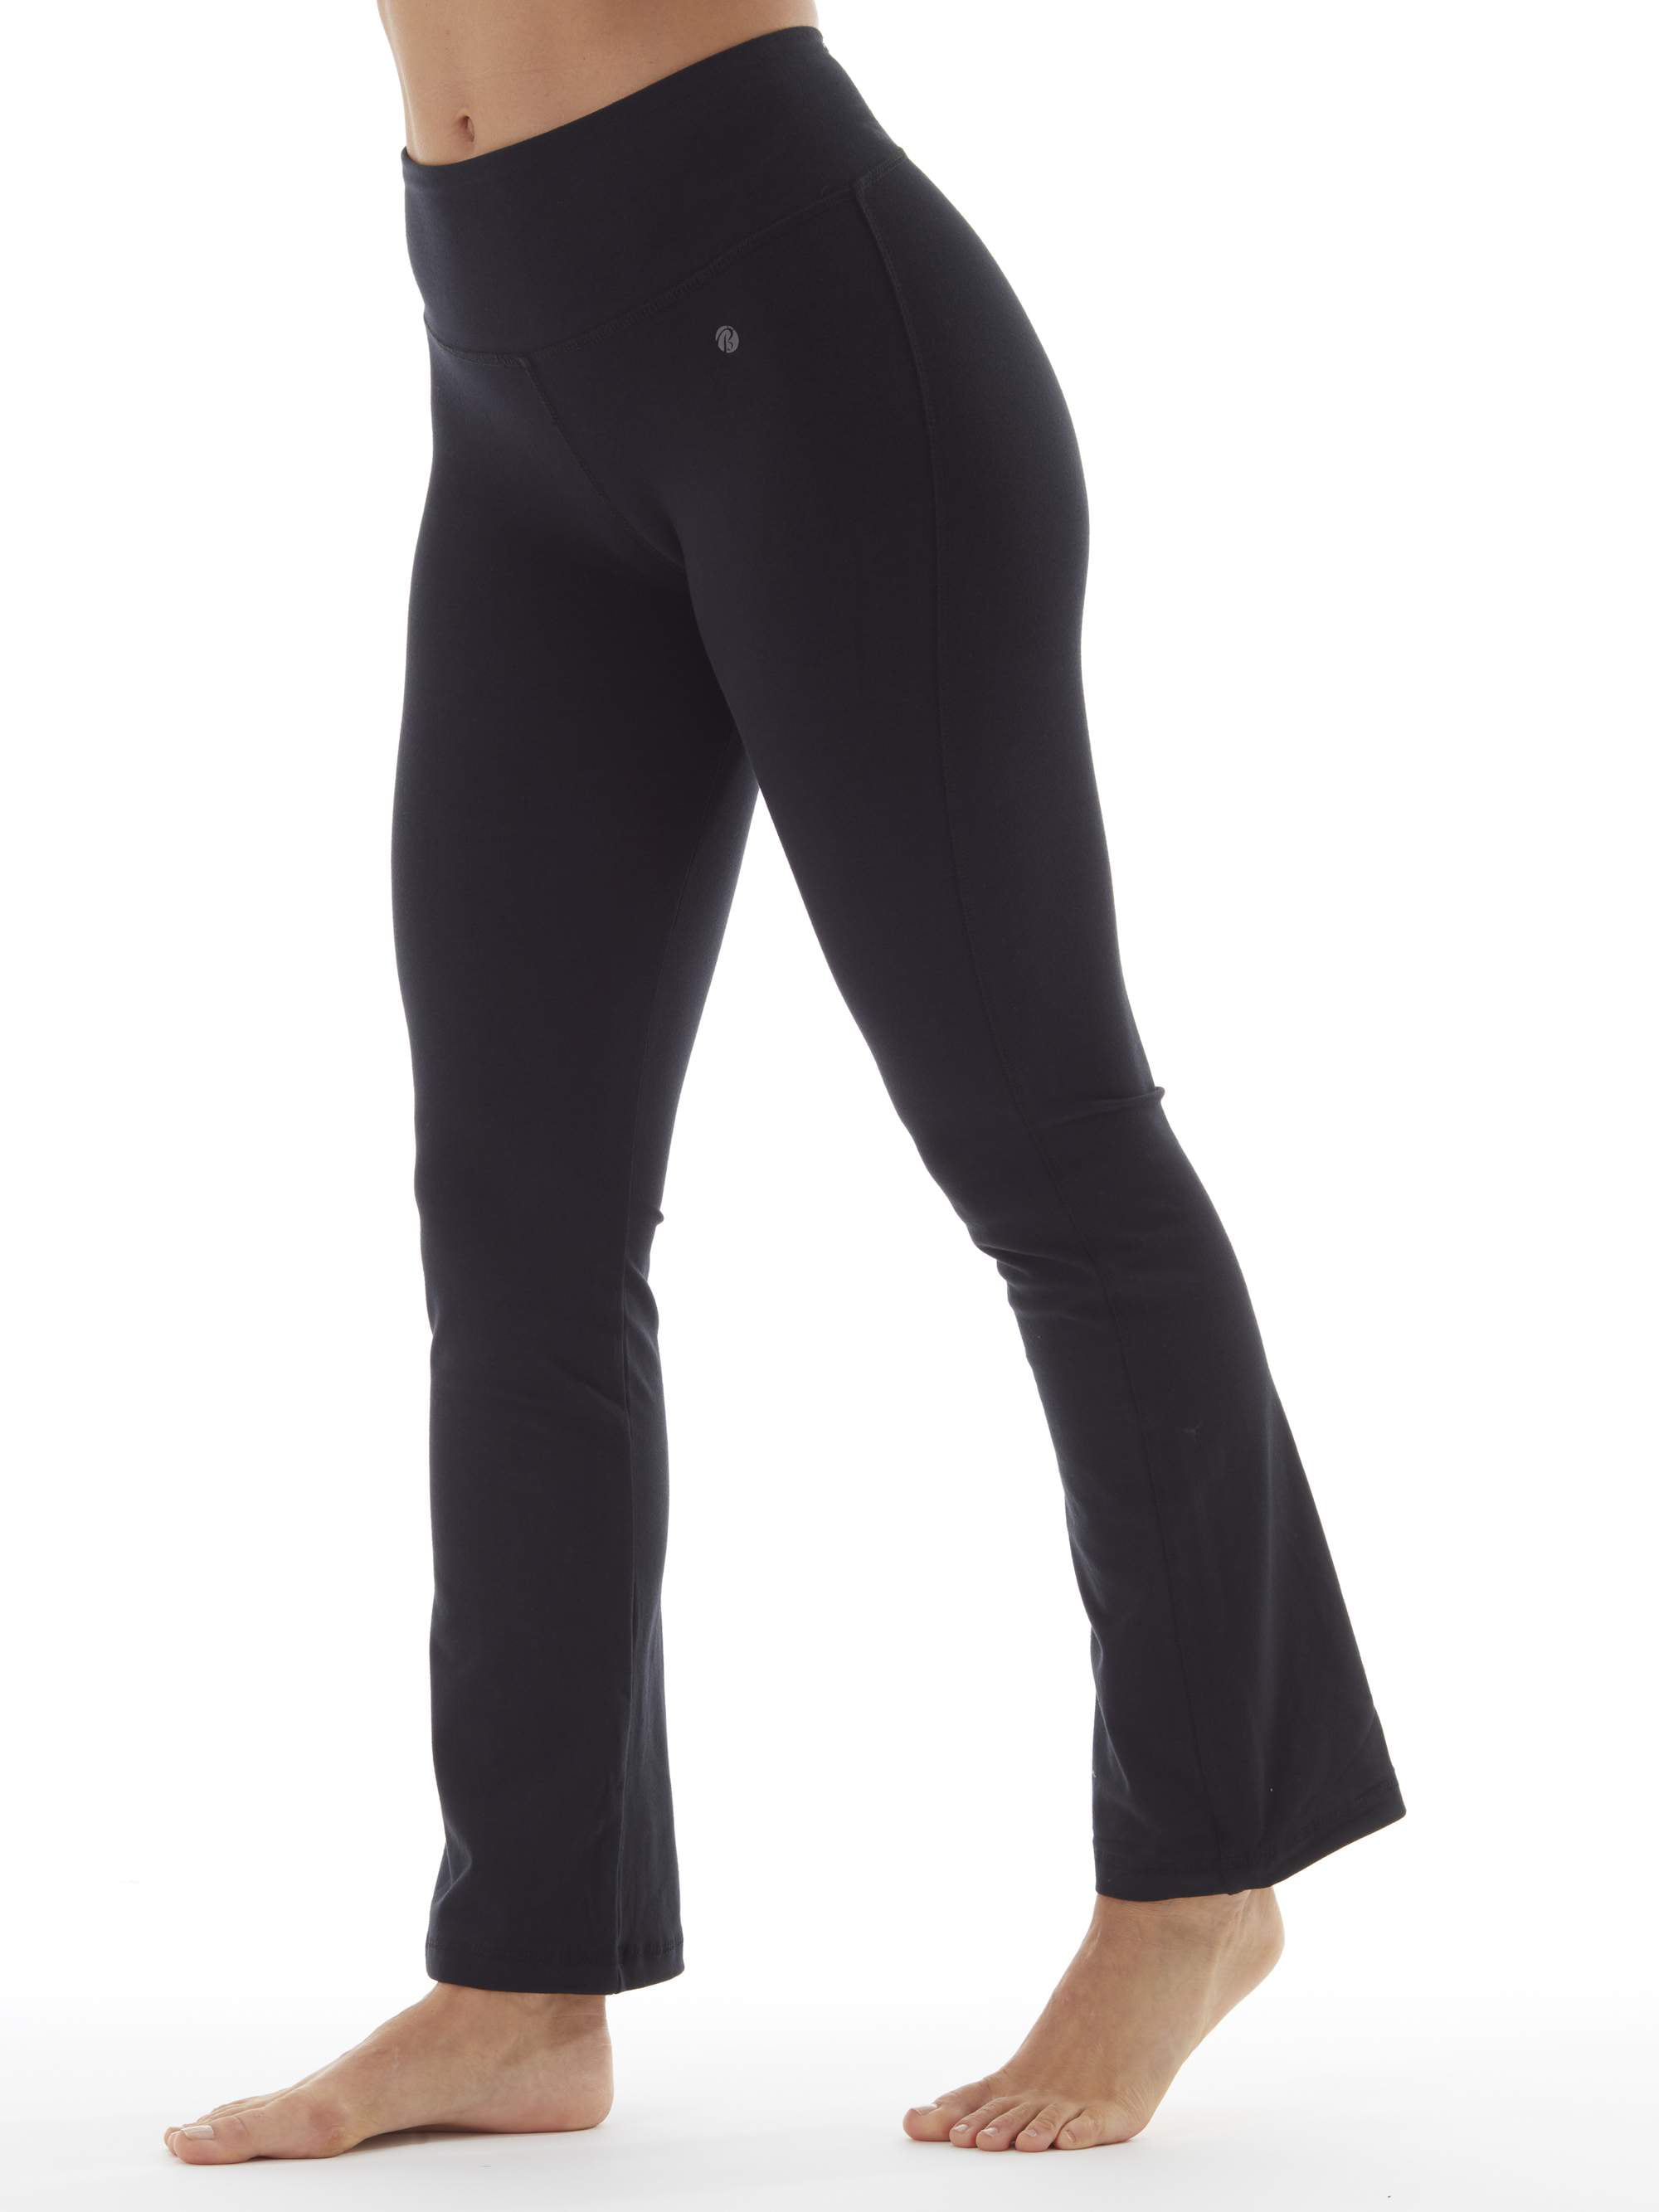 Bally Women's Core Active Tummy Control Yoga Pant Short Length ...